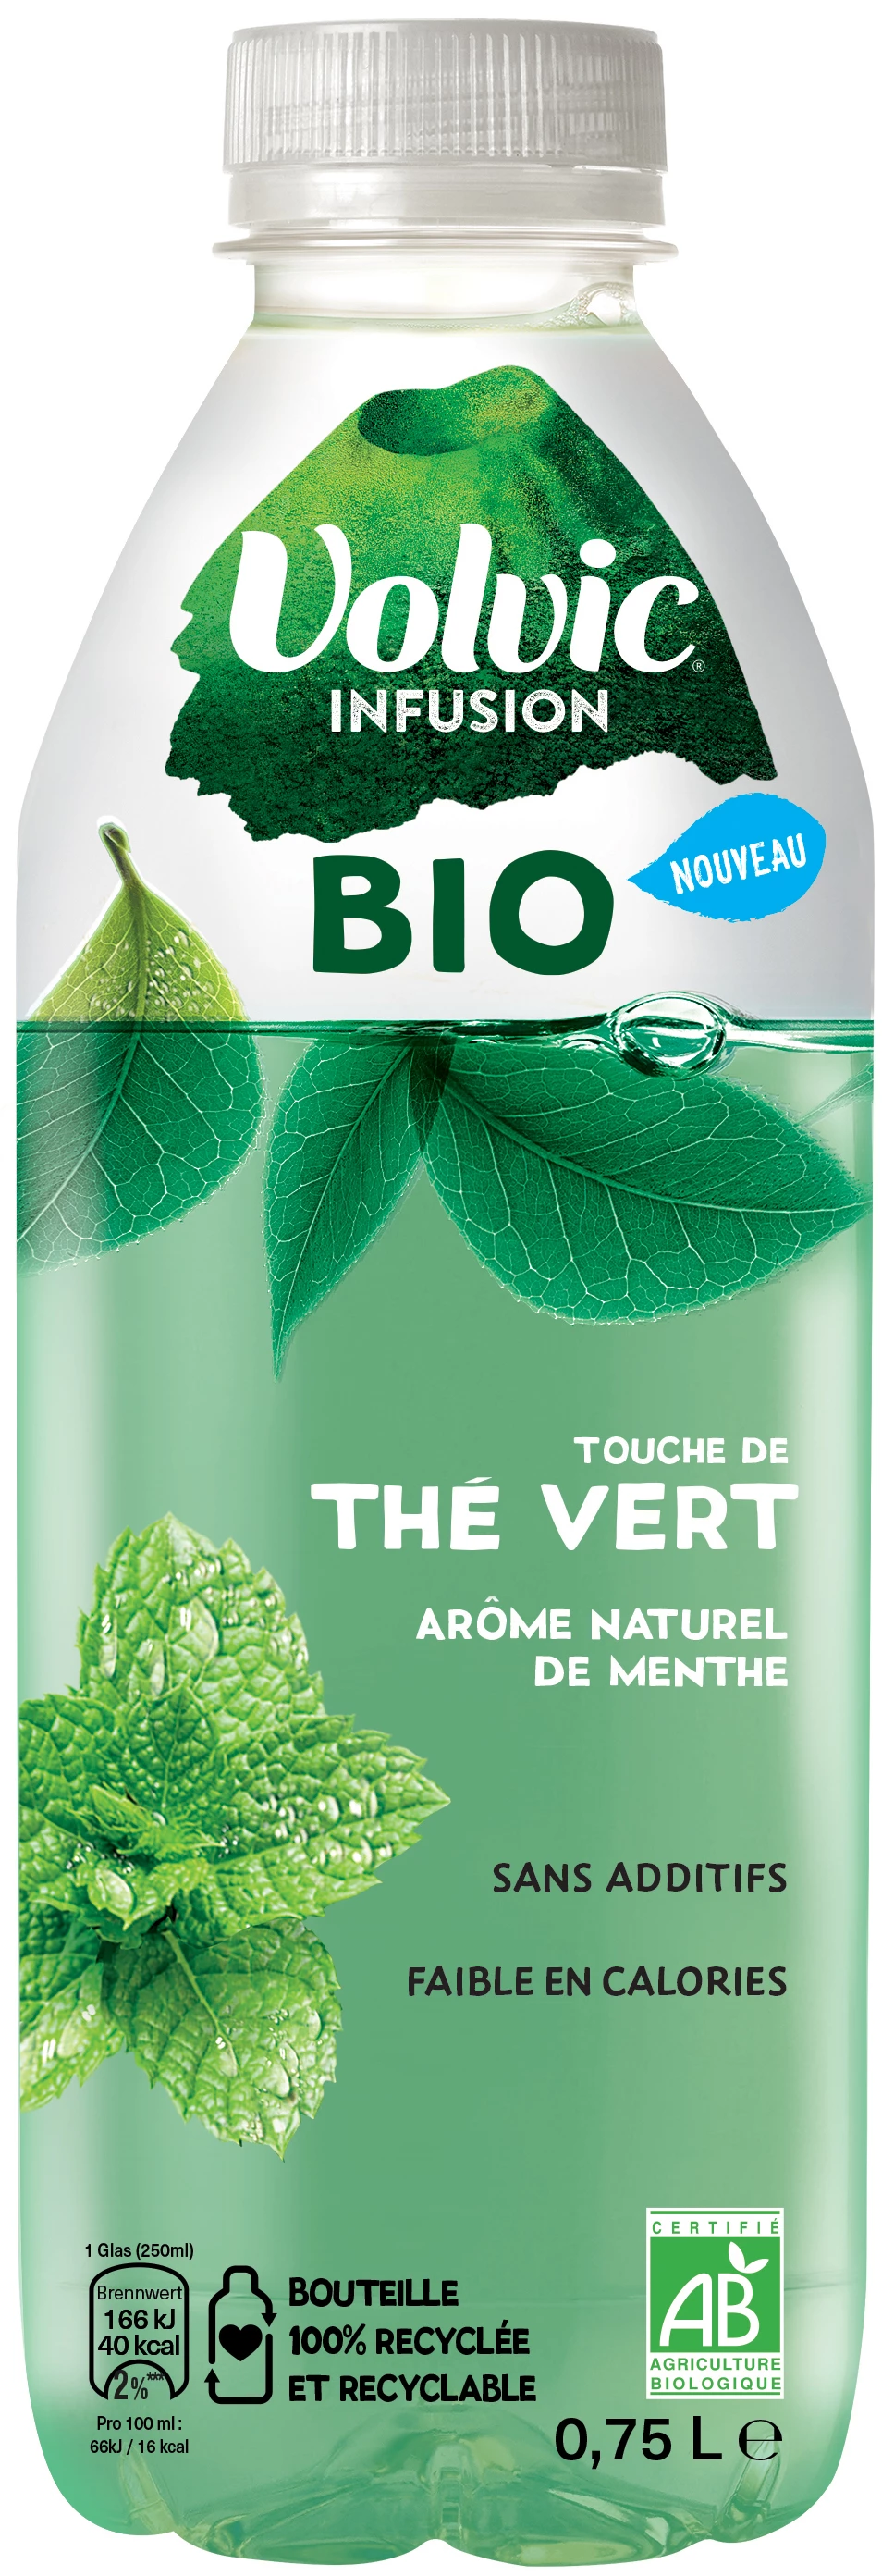 Volvic Infu Bio The Vert Ment